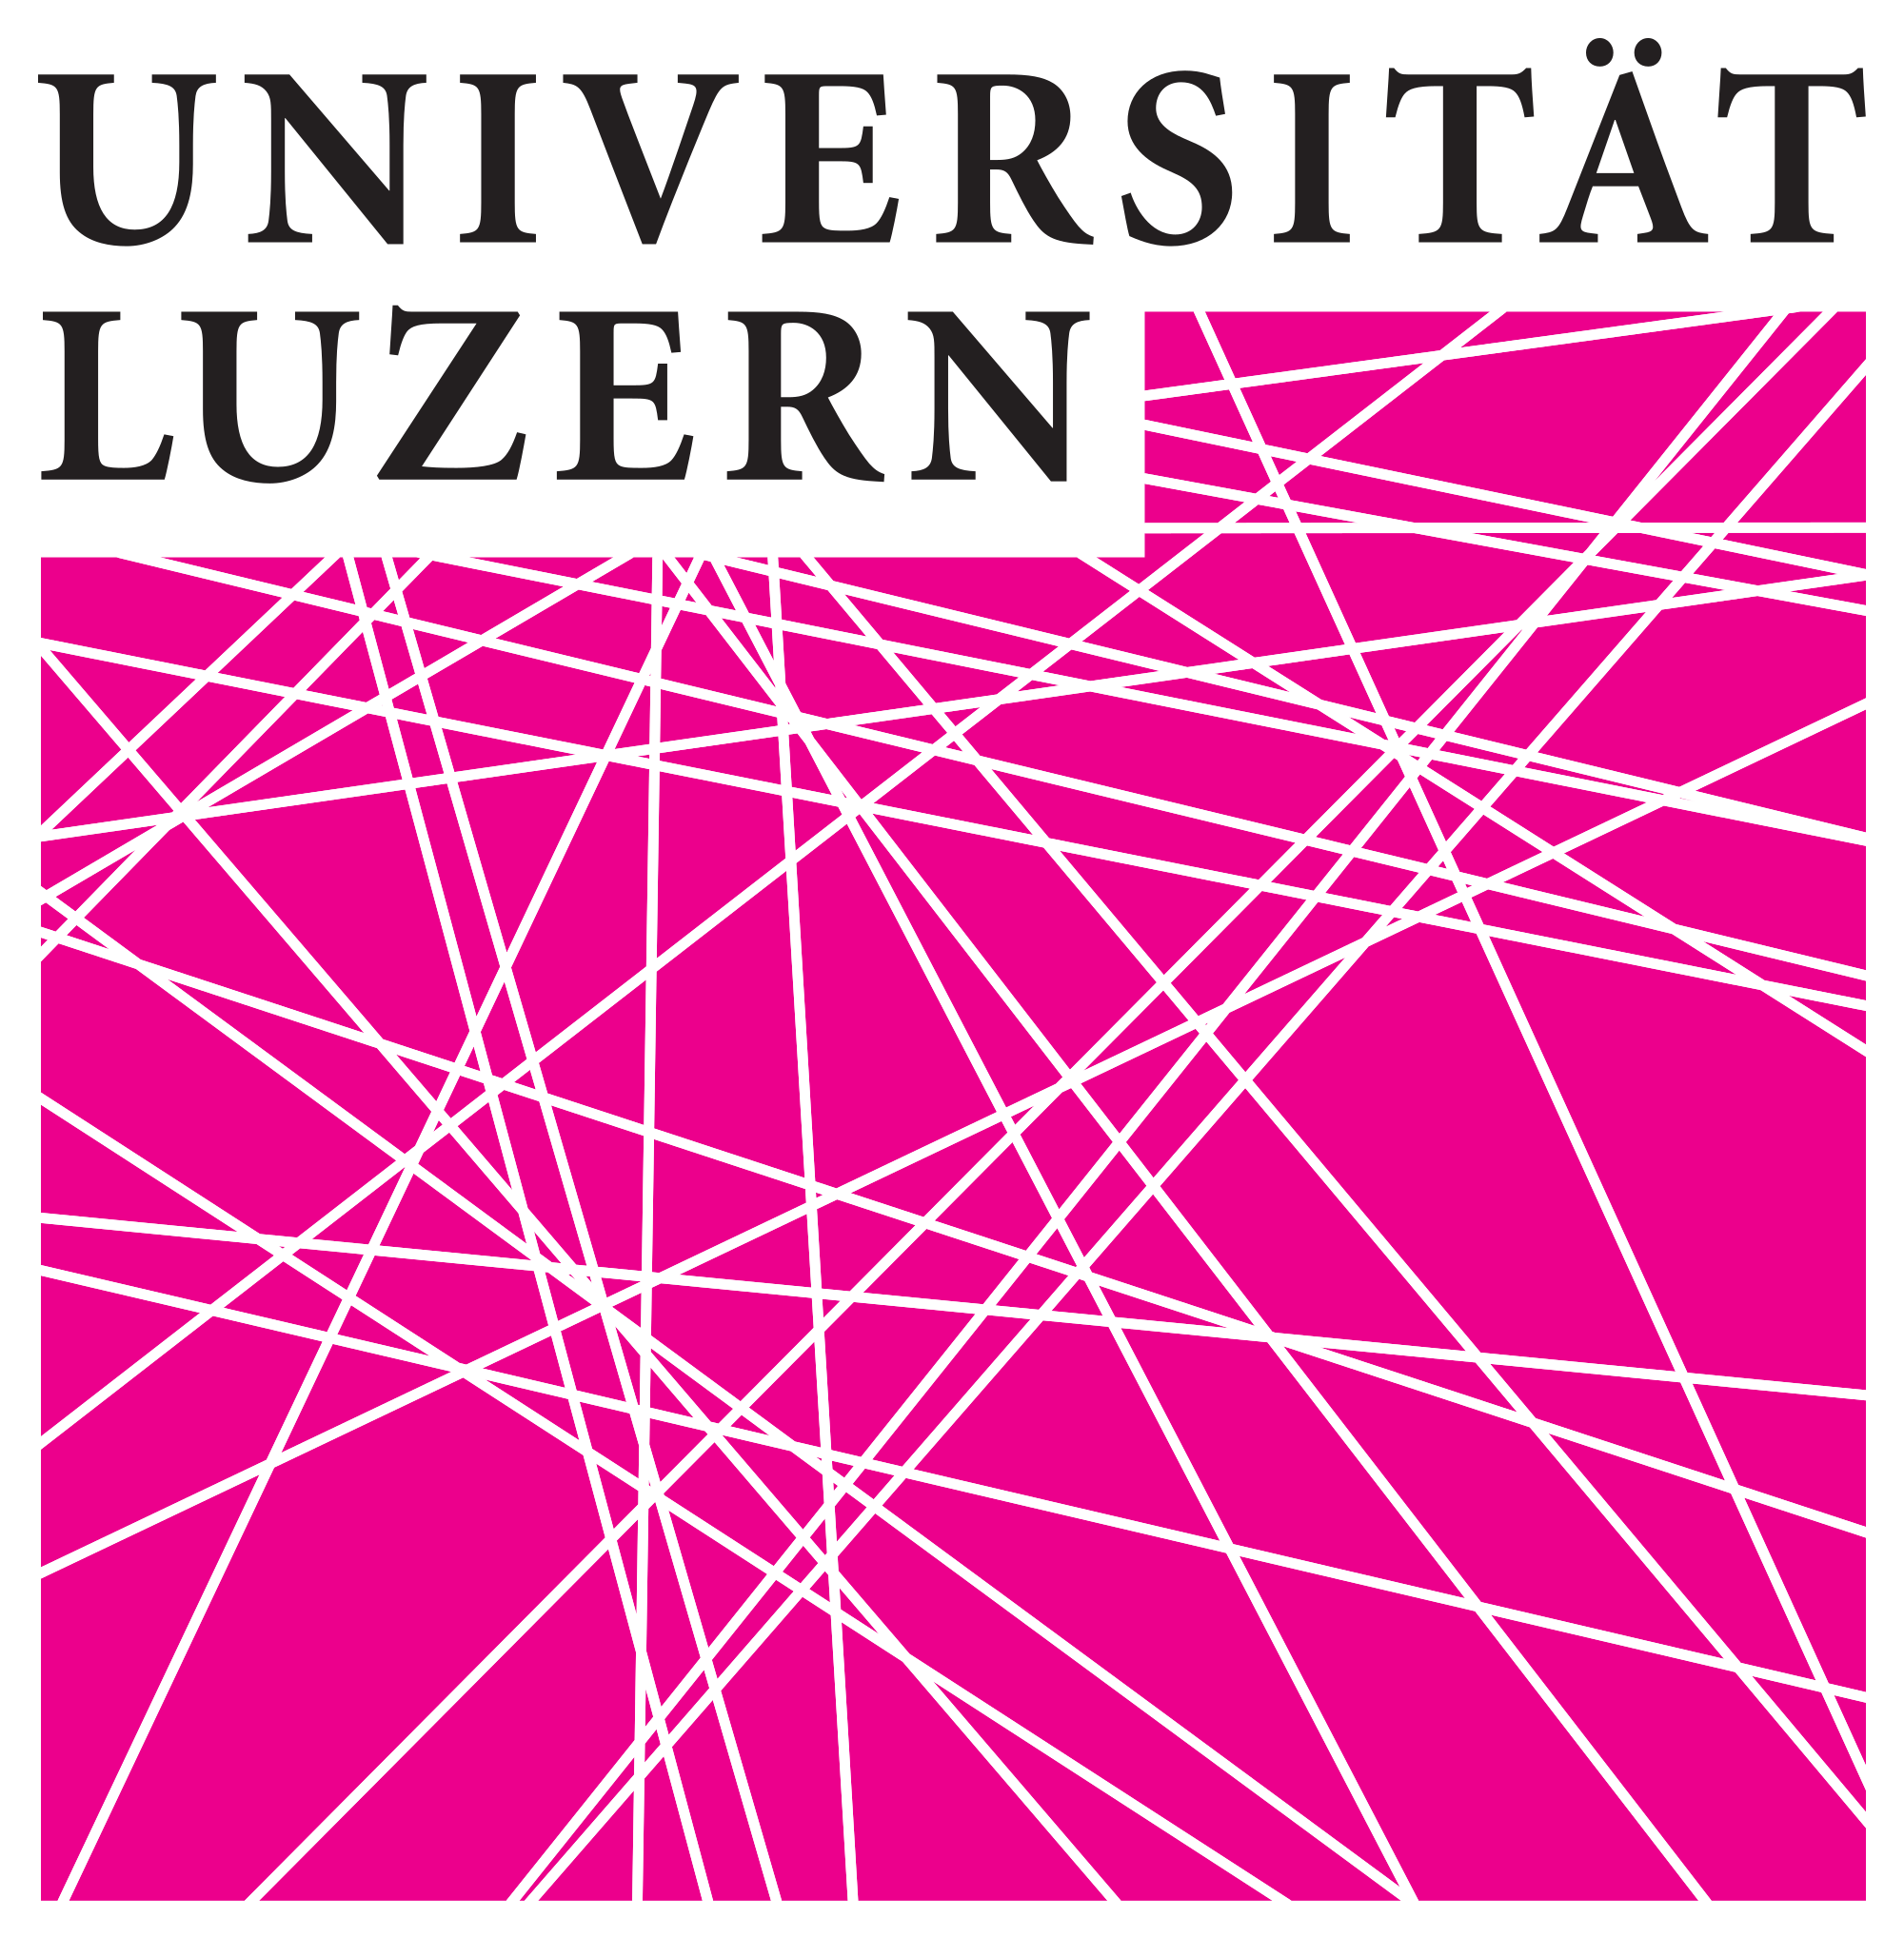 Lucerne University